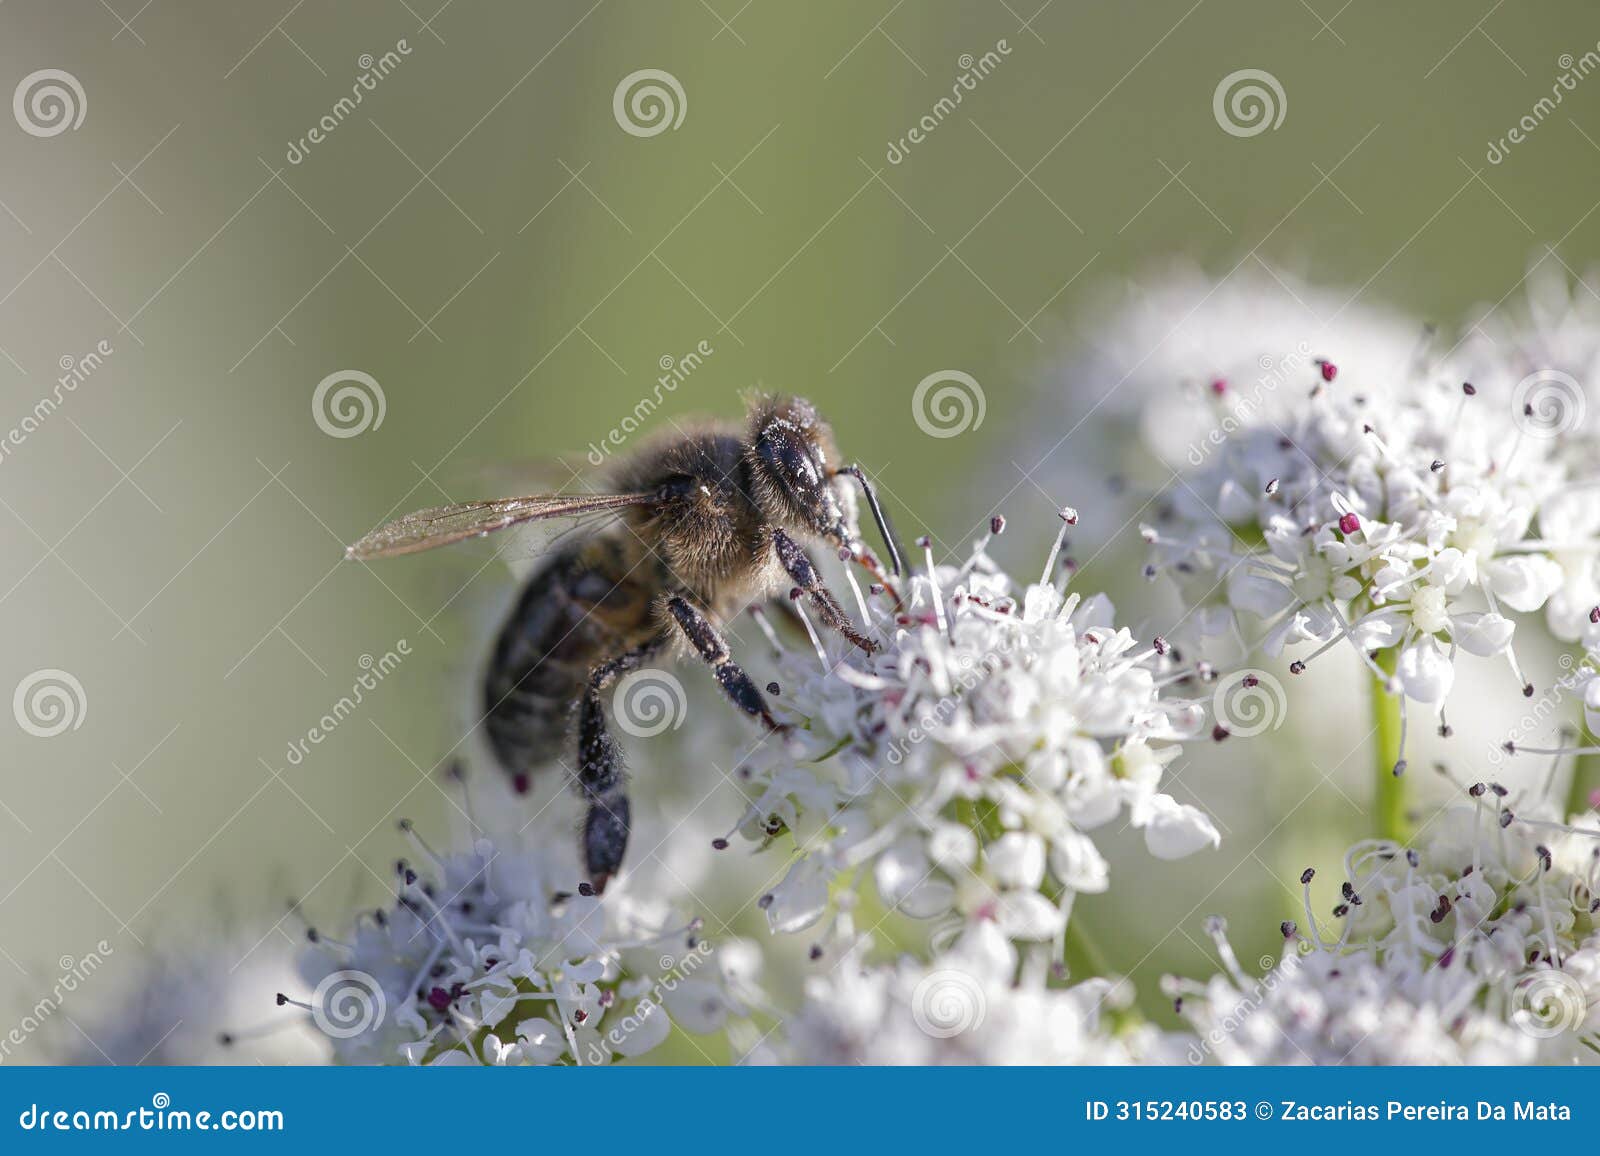 european bee sucking pollen and nectar